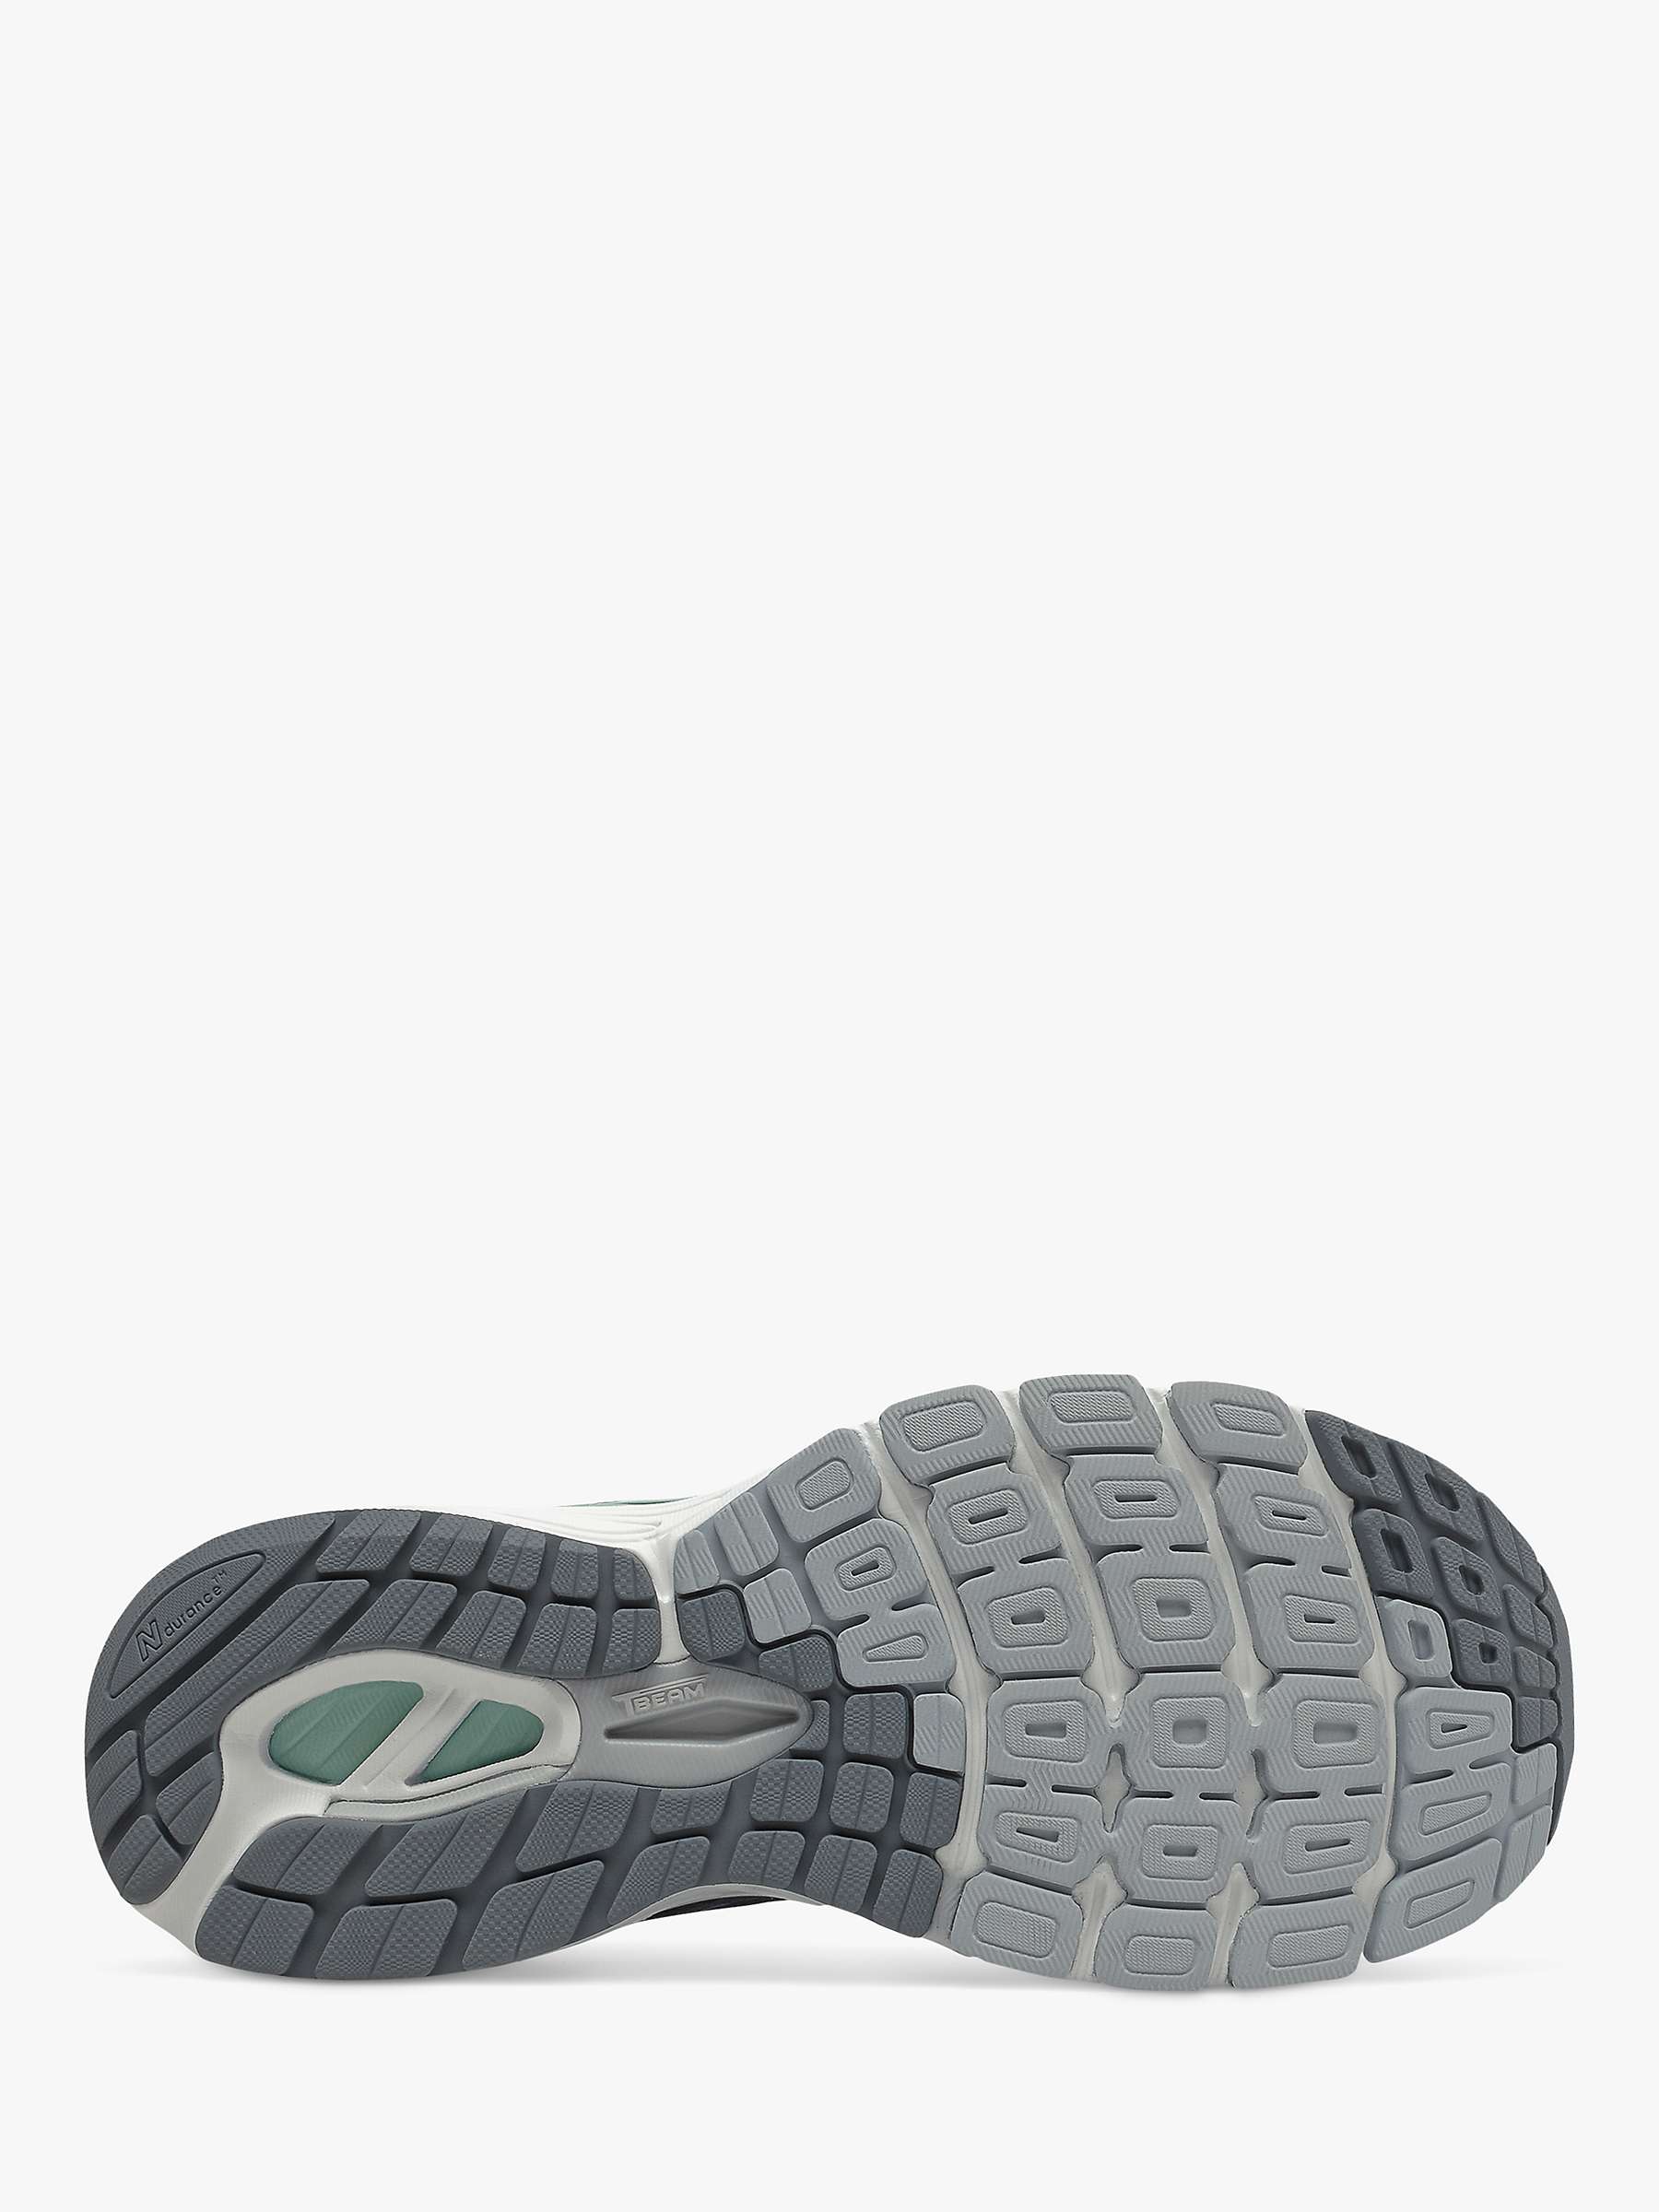 Buy New Balance Vaygo Men's Running Shoes Online at johnlewis.com